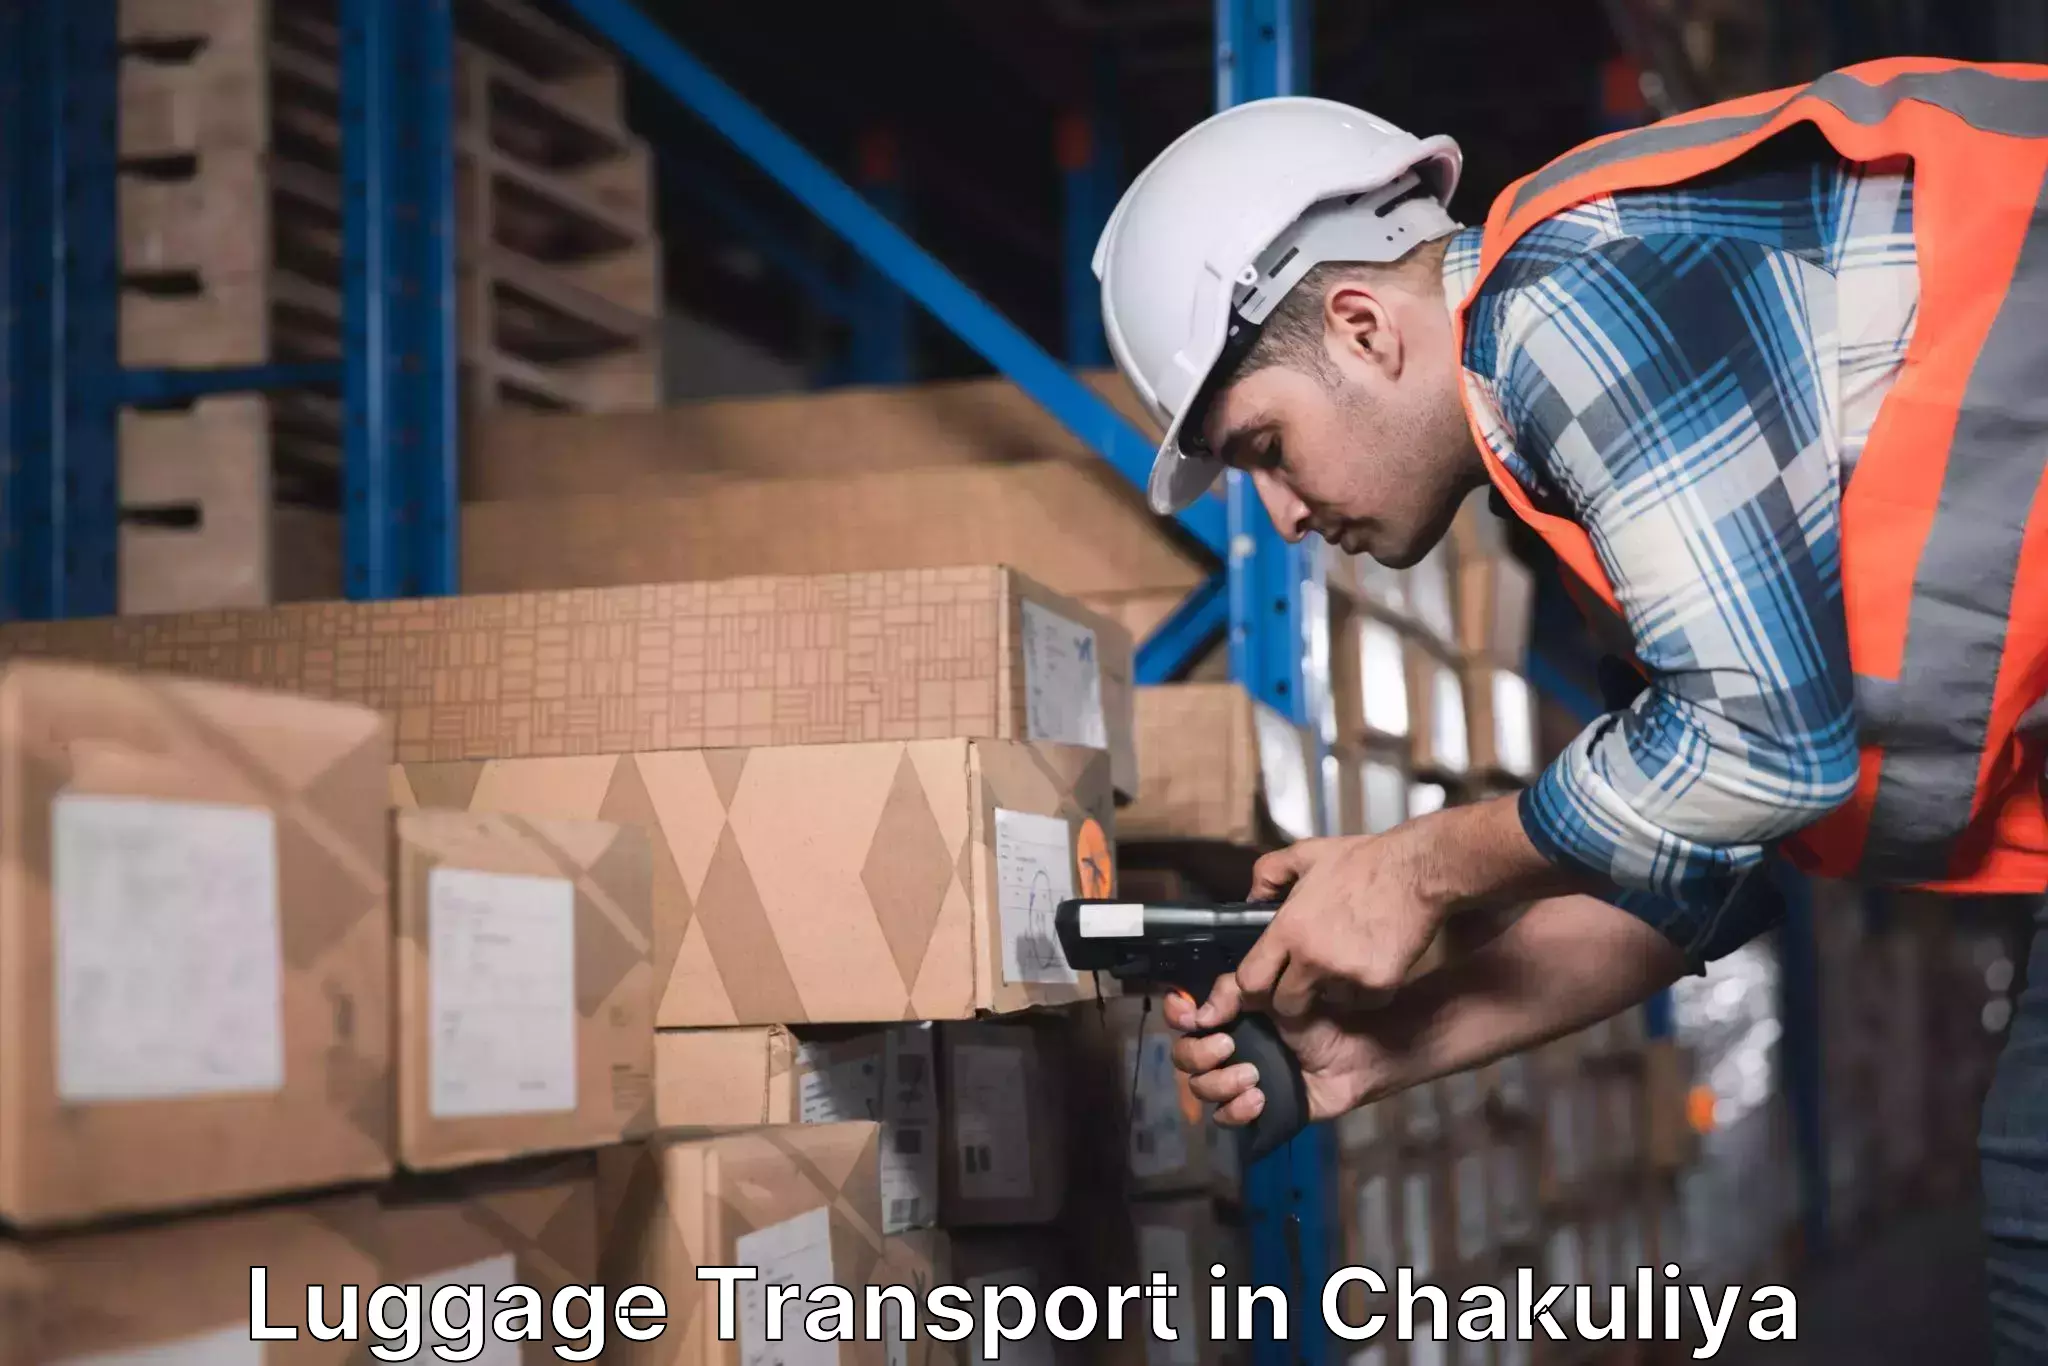 Domestic luggage transport in Chakuliya